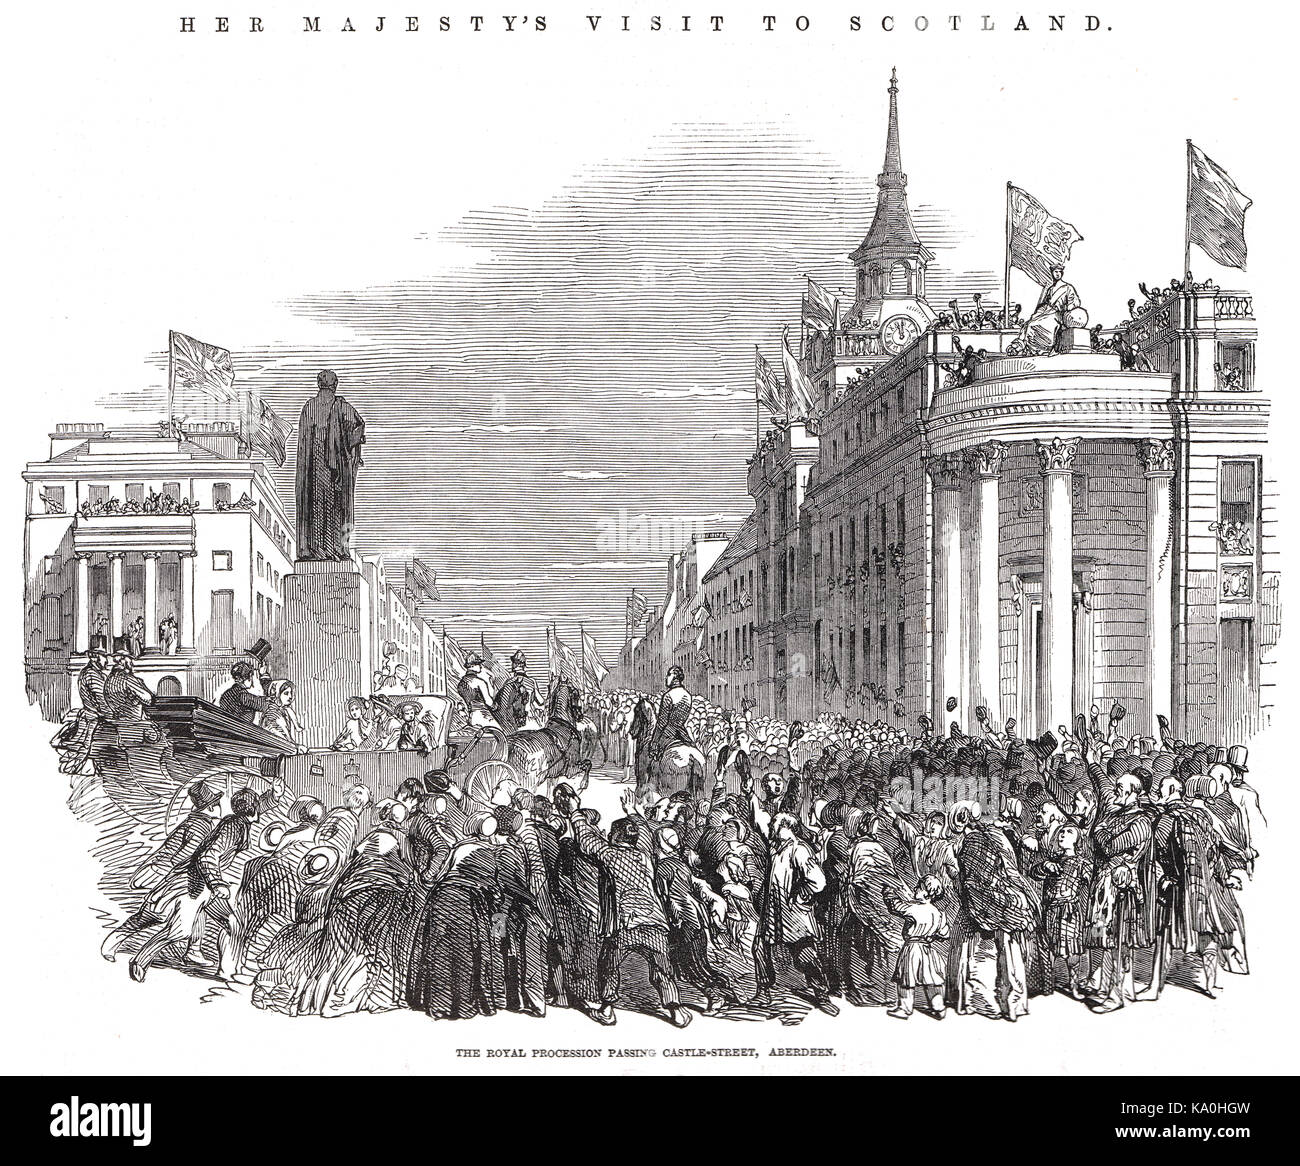 Queen Victoria's Visit to Aberdeen, 1848 Stock Photo